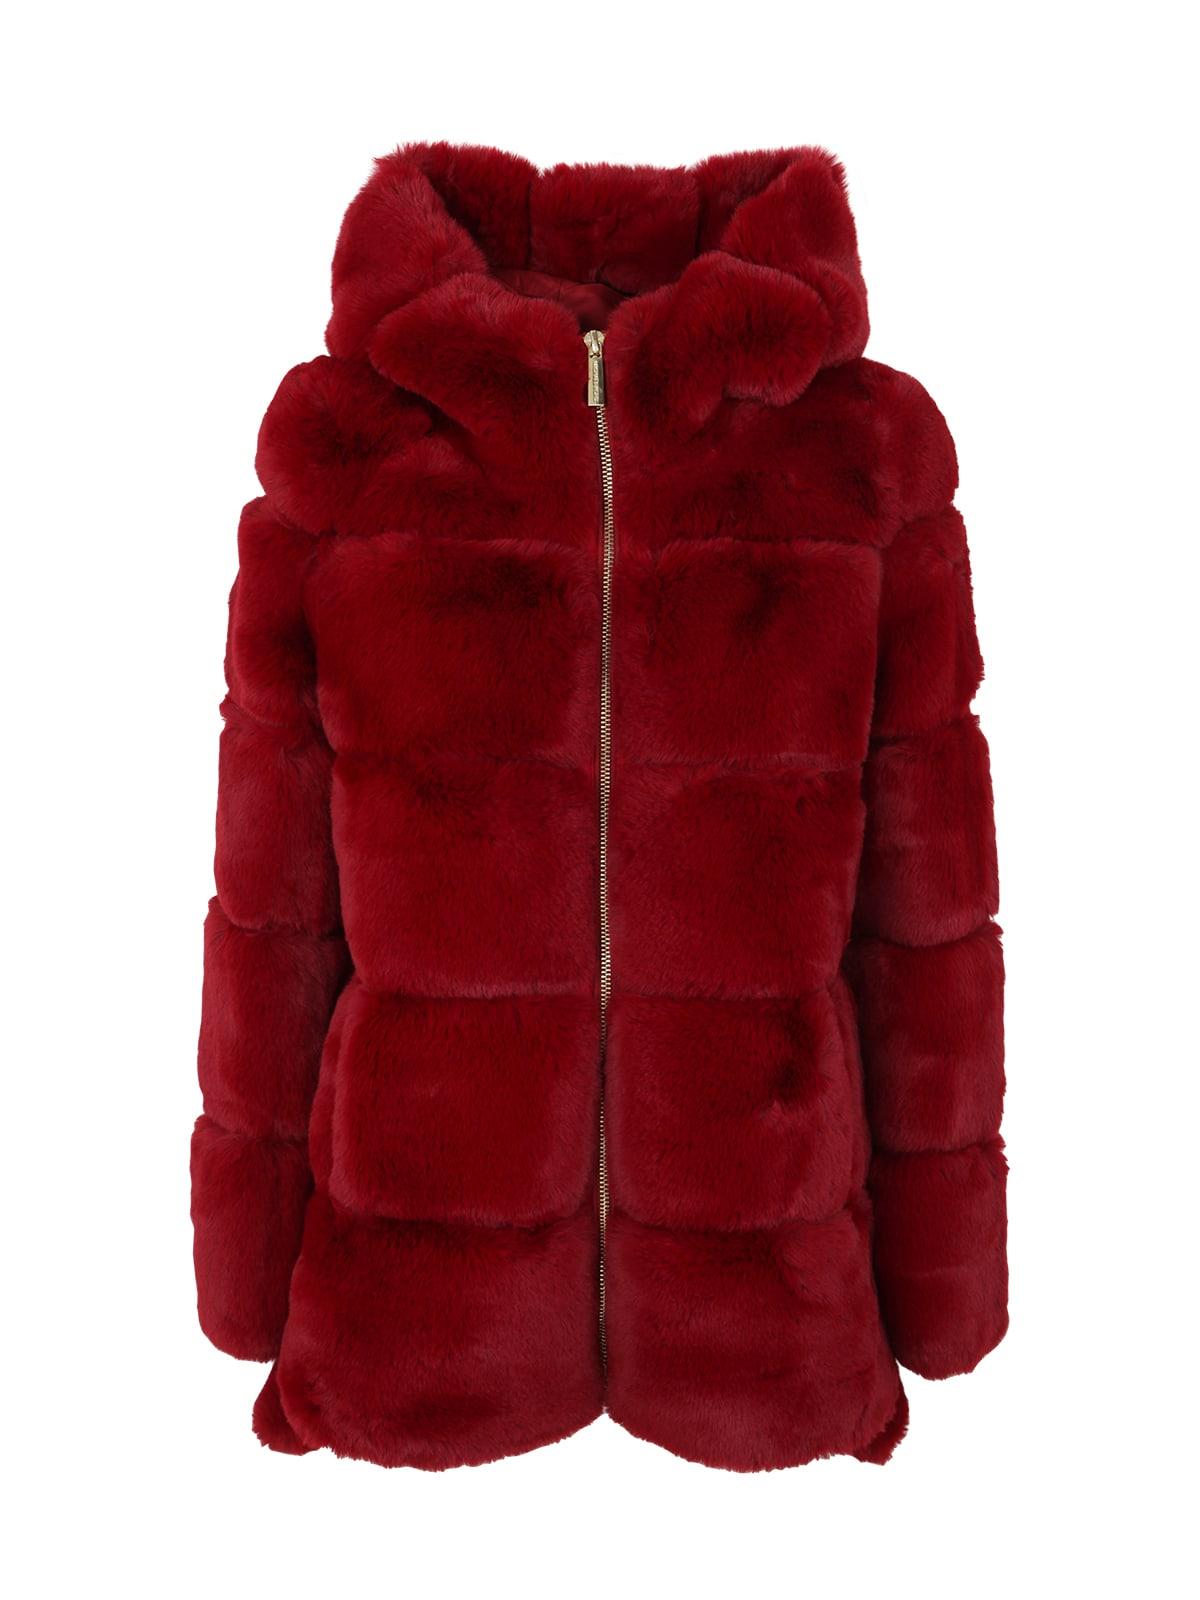 Michael Kors Faux Fur Zip Front Jacket in Red | Lyst